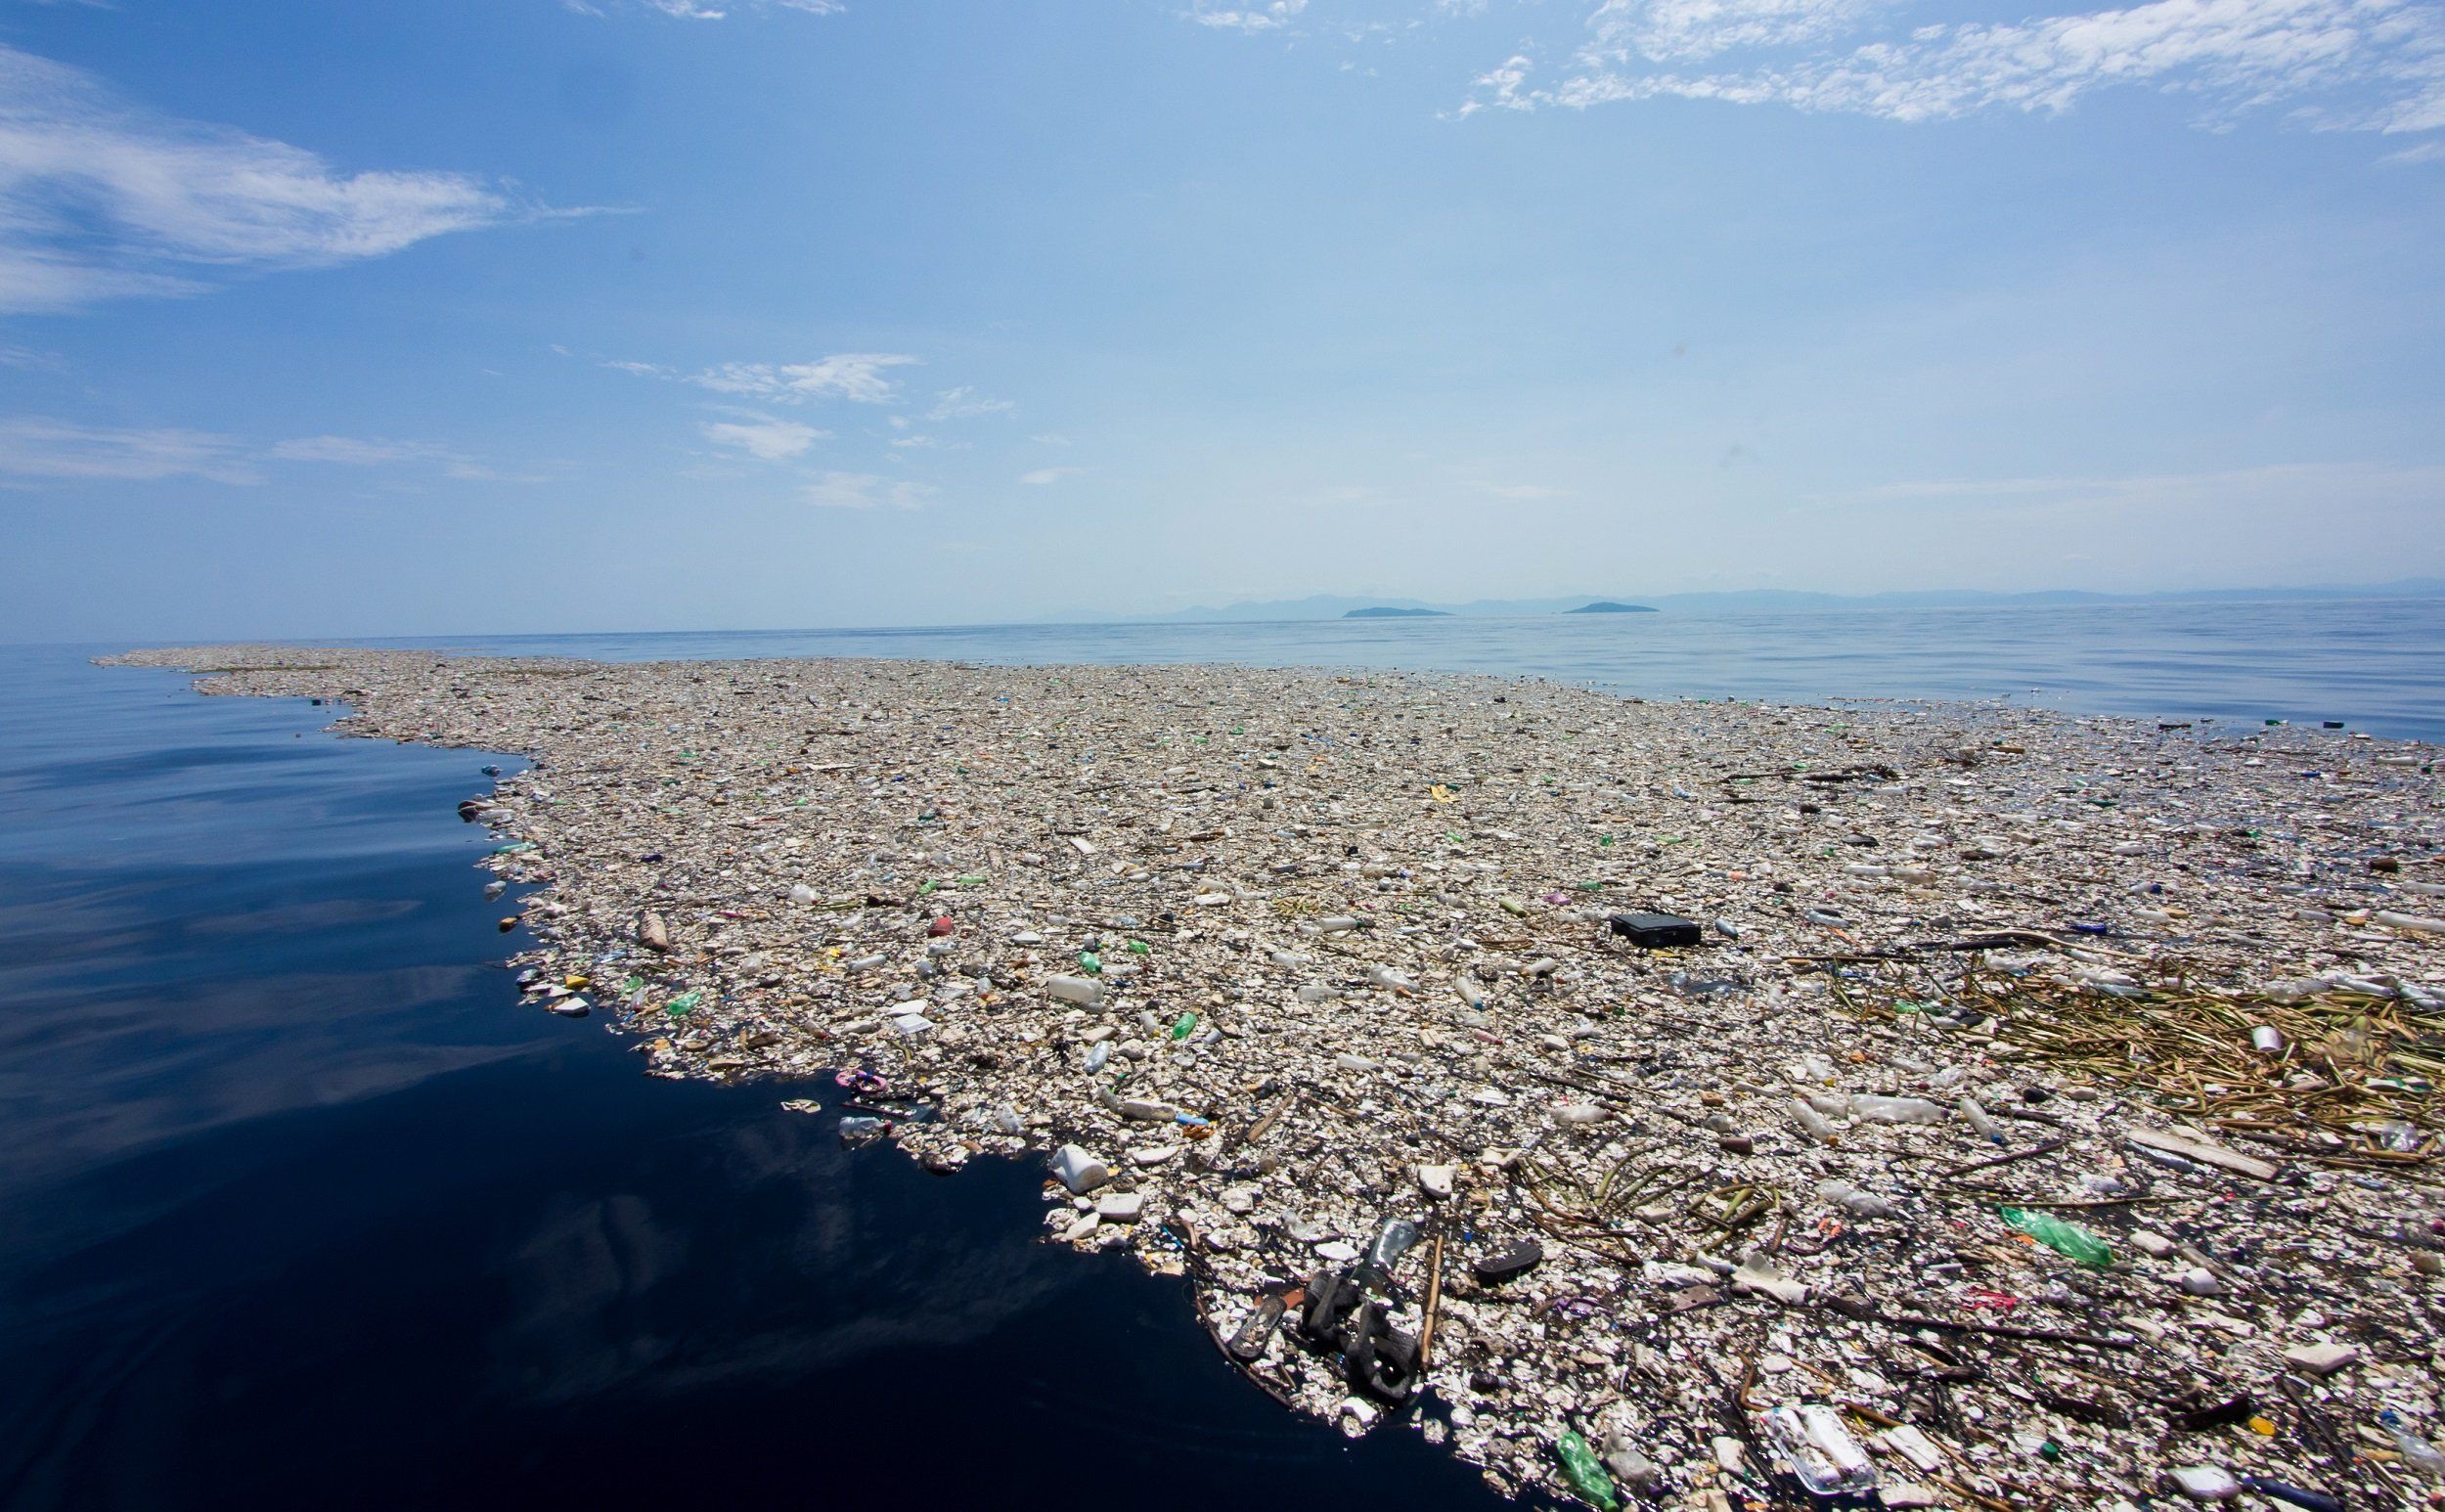 PSH Reciclando - Plastic's island